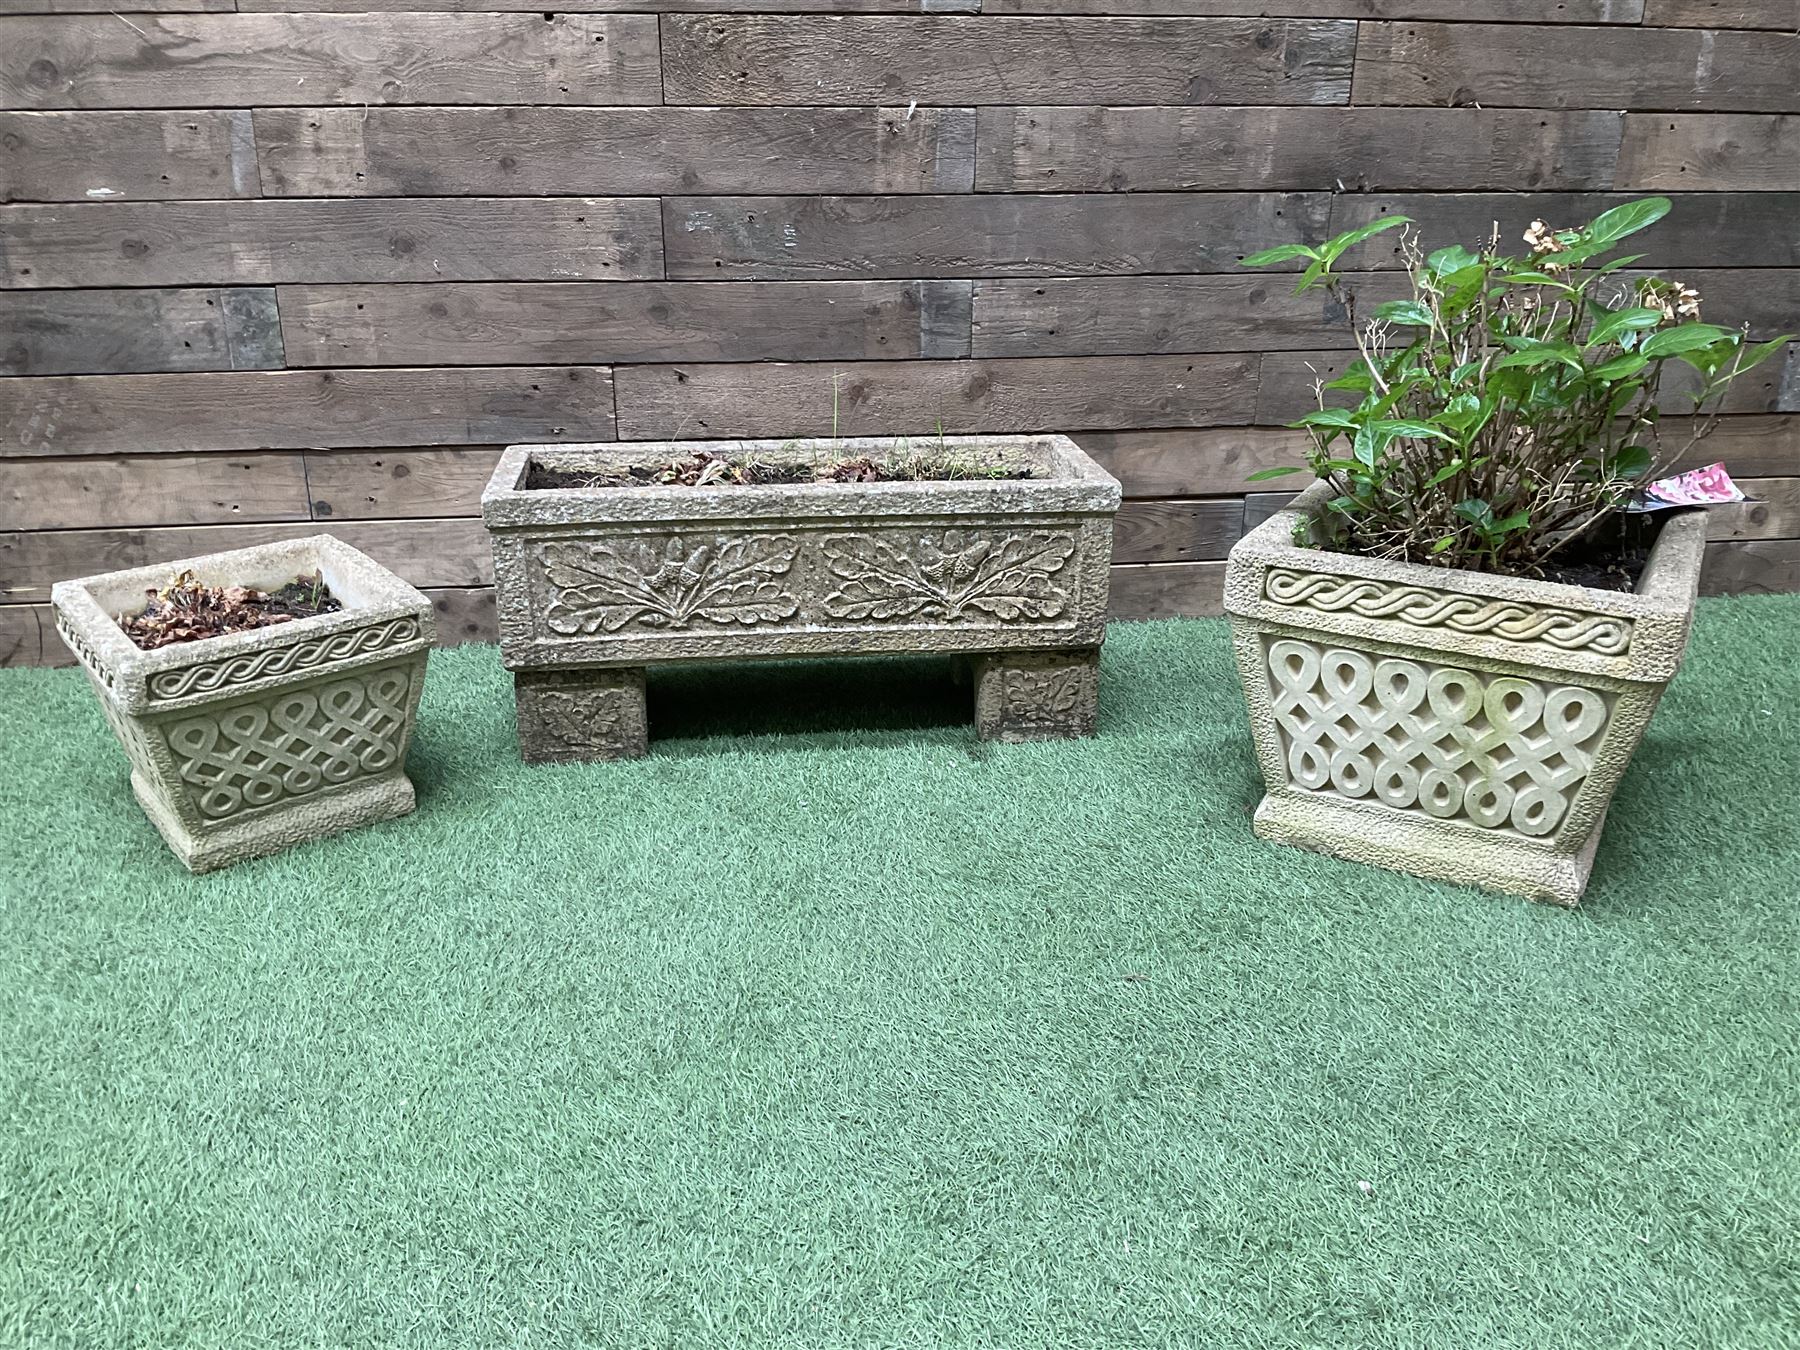 Set of three cast stone garden planters